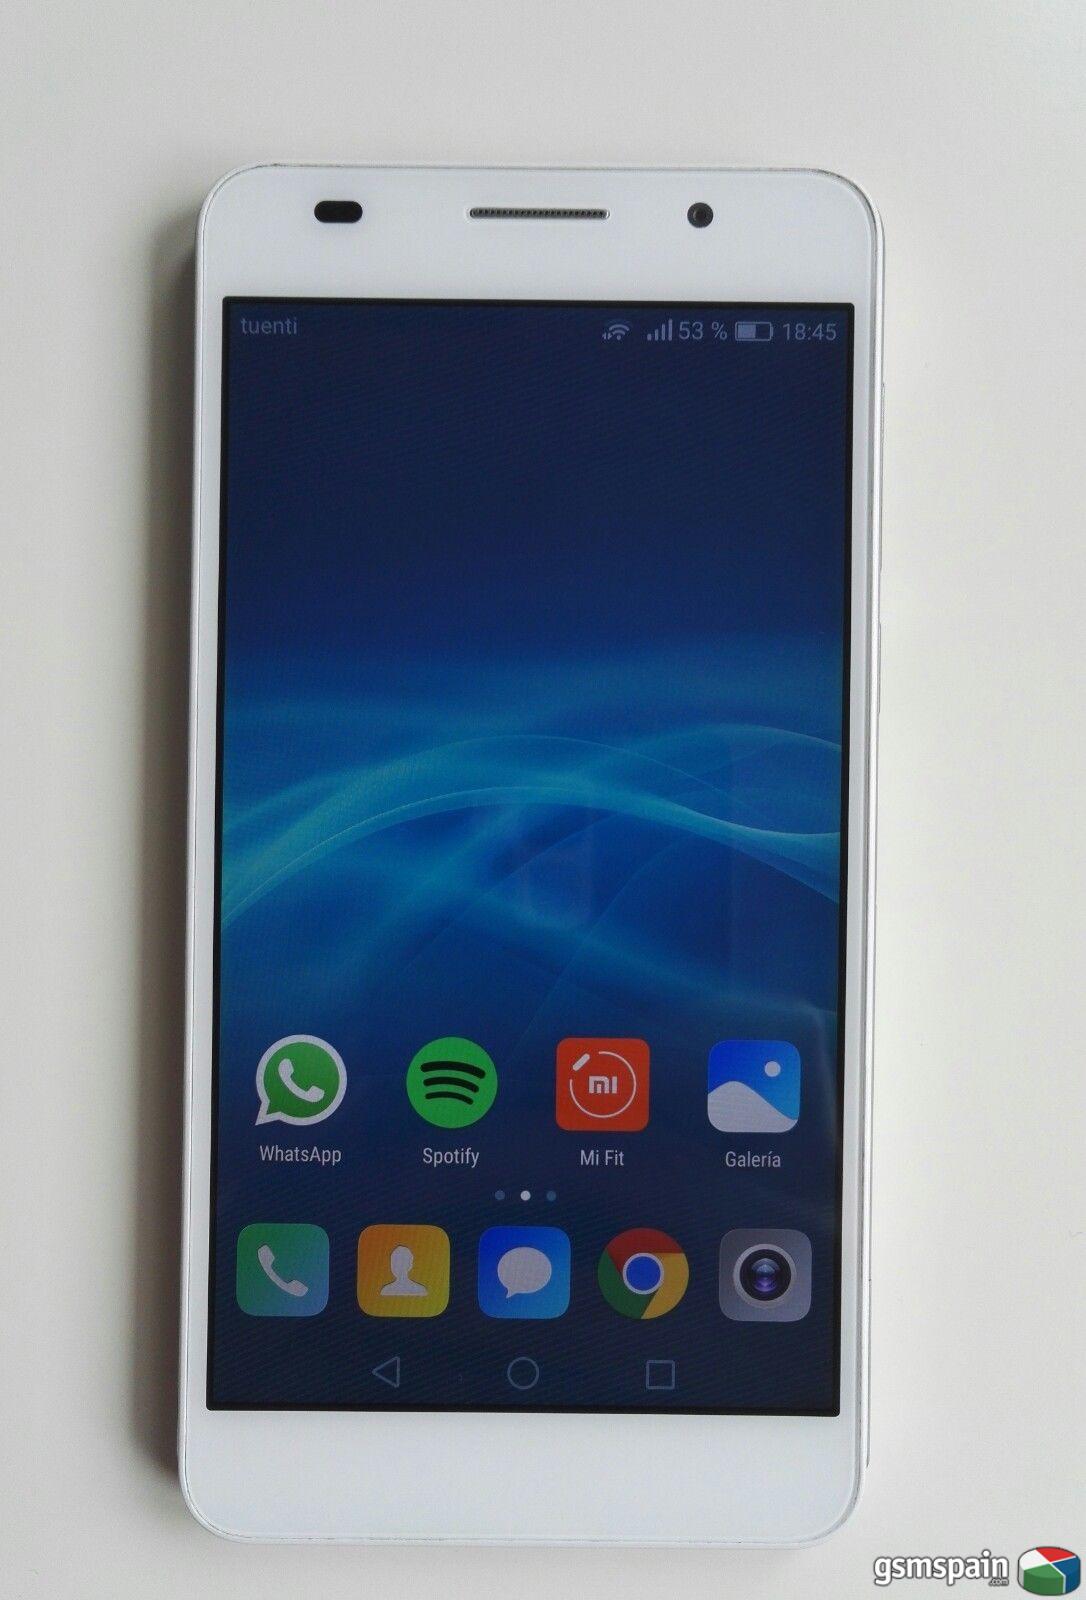 [VENDO] Huawei Honor 6 como nuevo